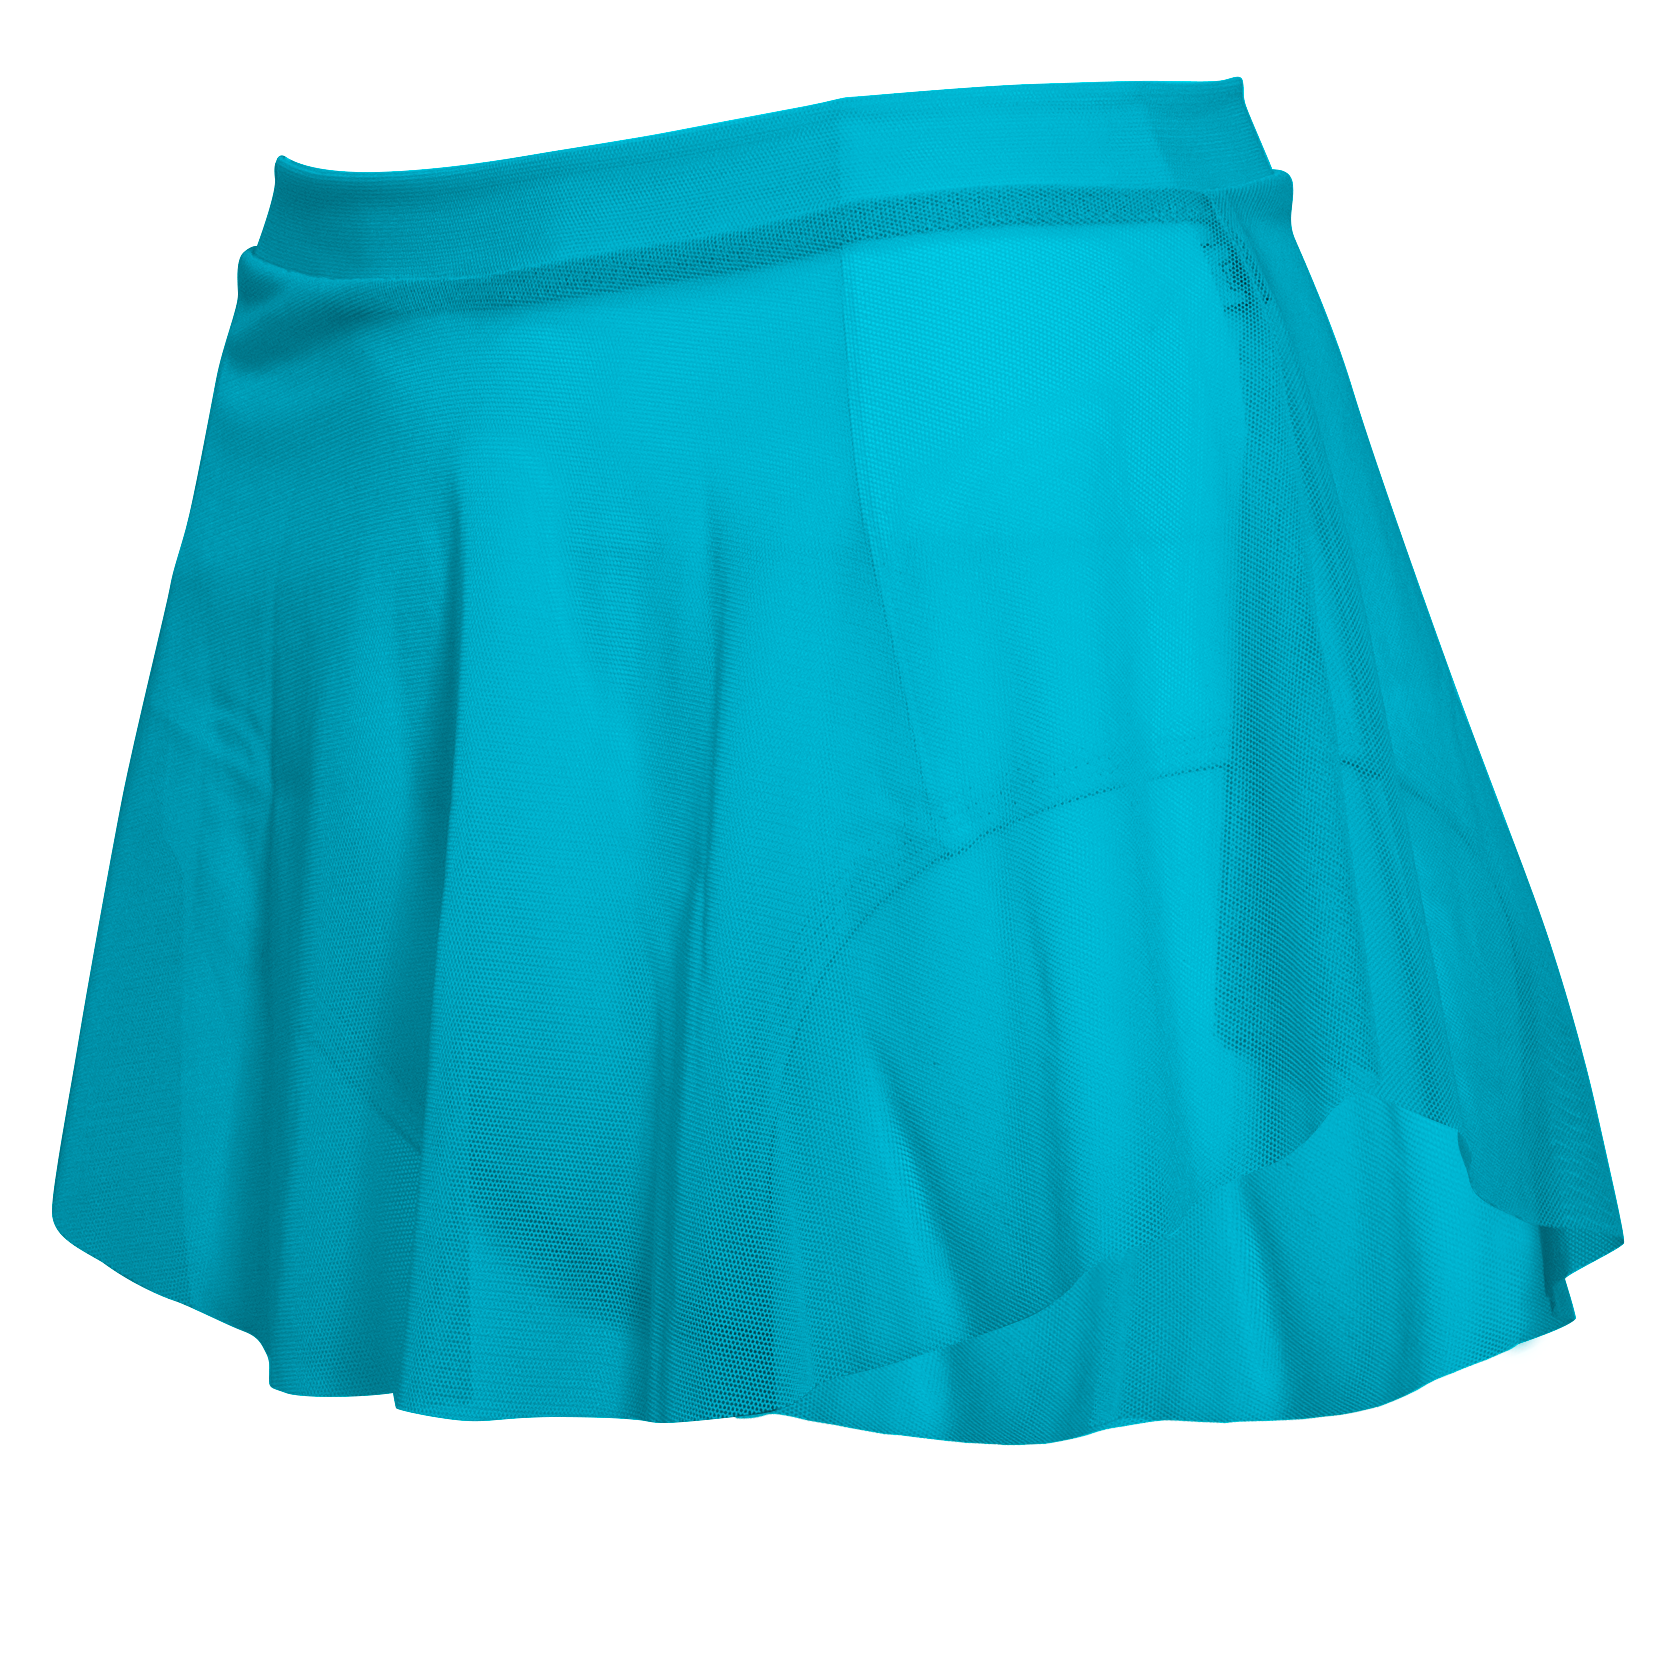 Meridien Mesh Pull-On Skirt - Child - Made in USA